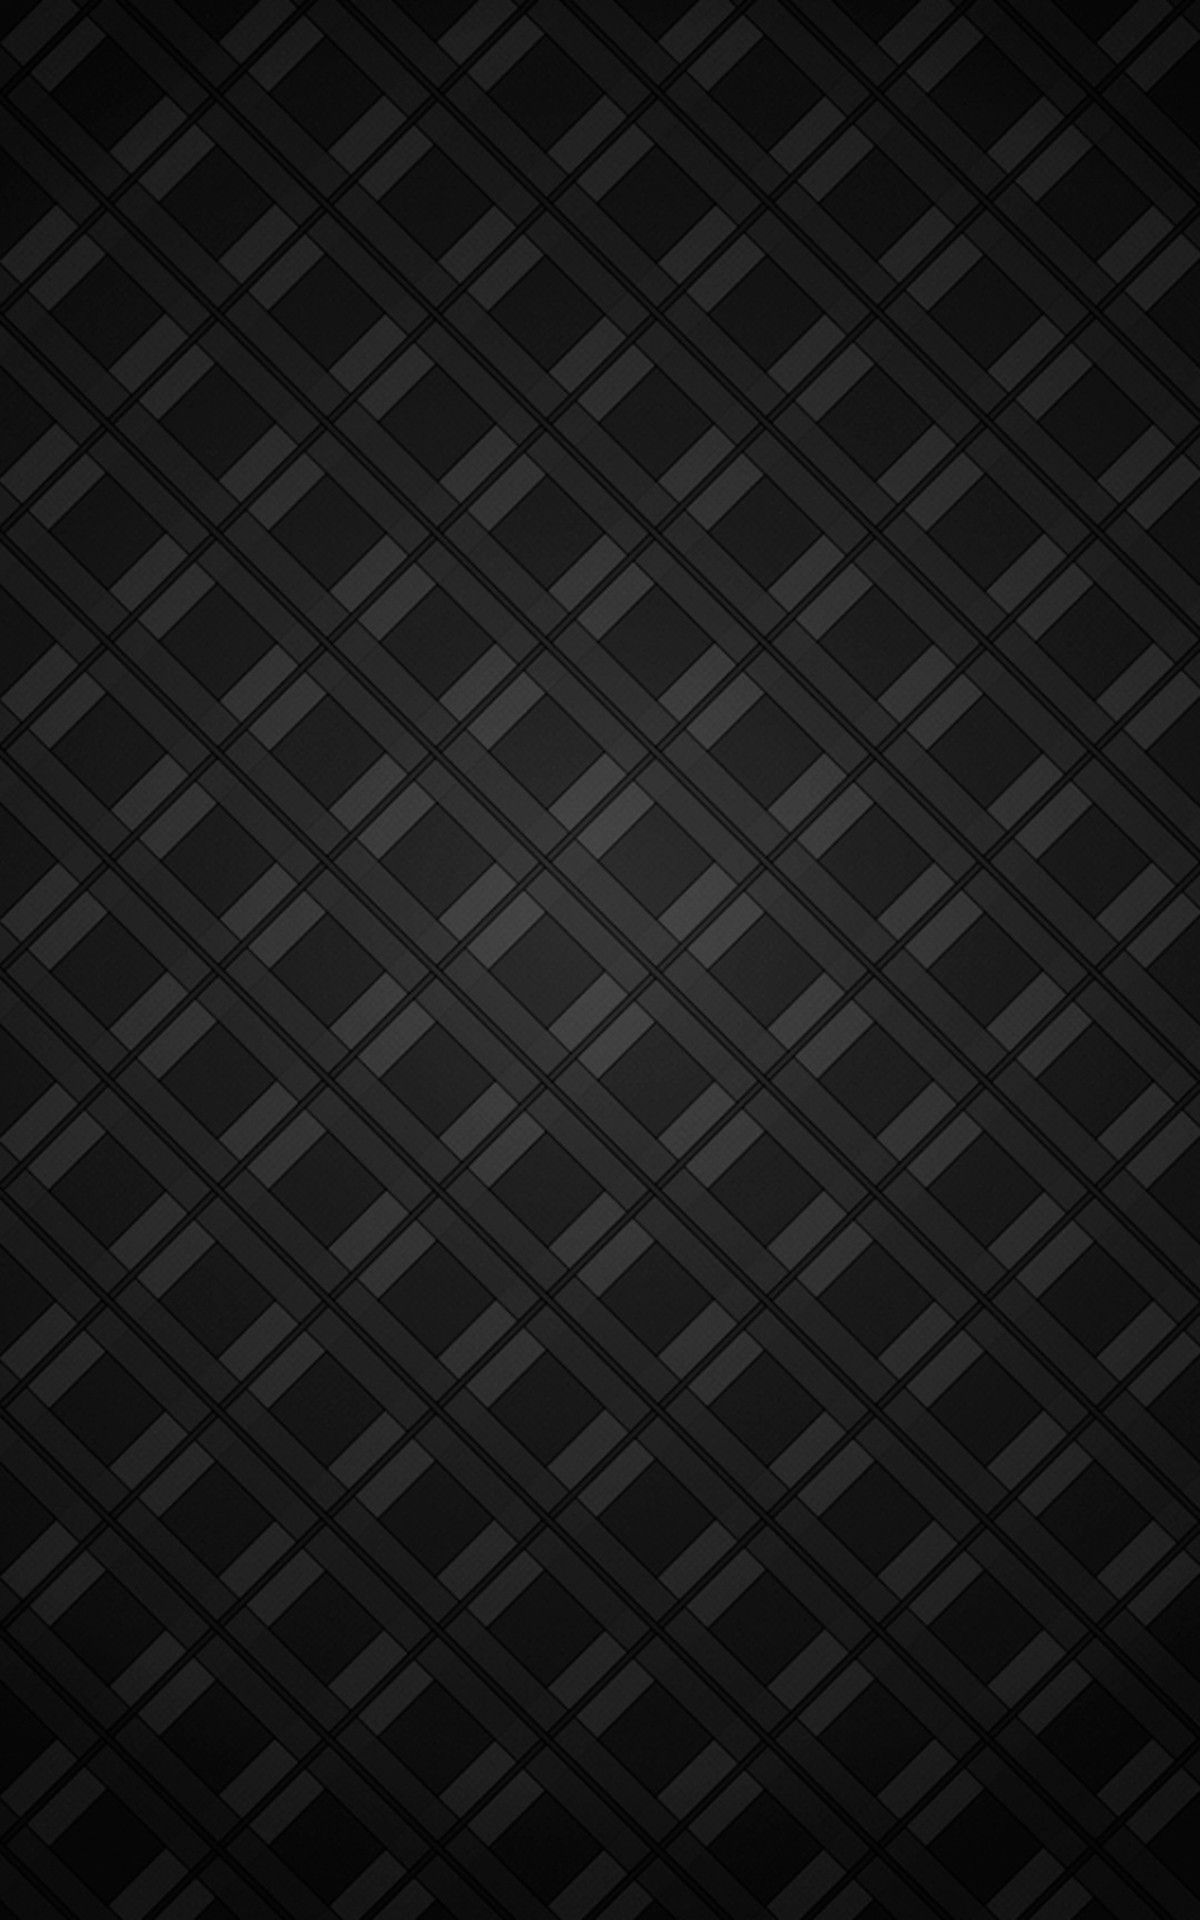 As Black Screen iPhone Wallpapers on WallpaperDog